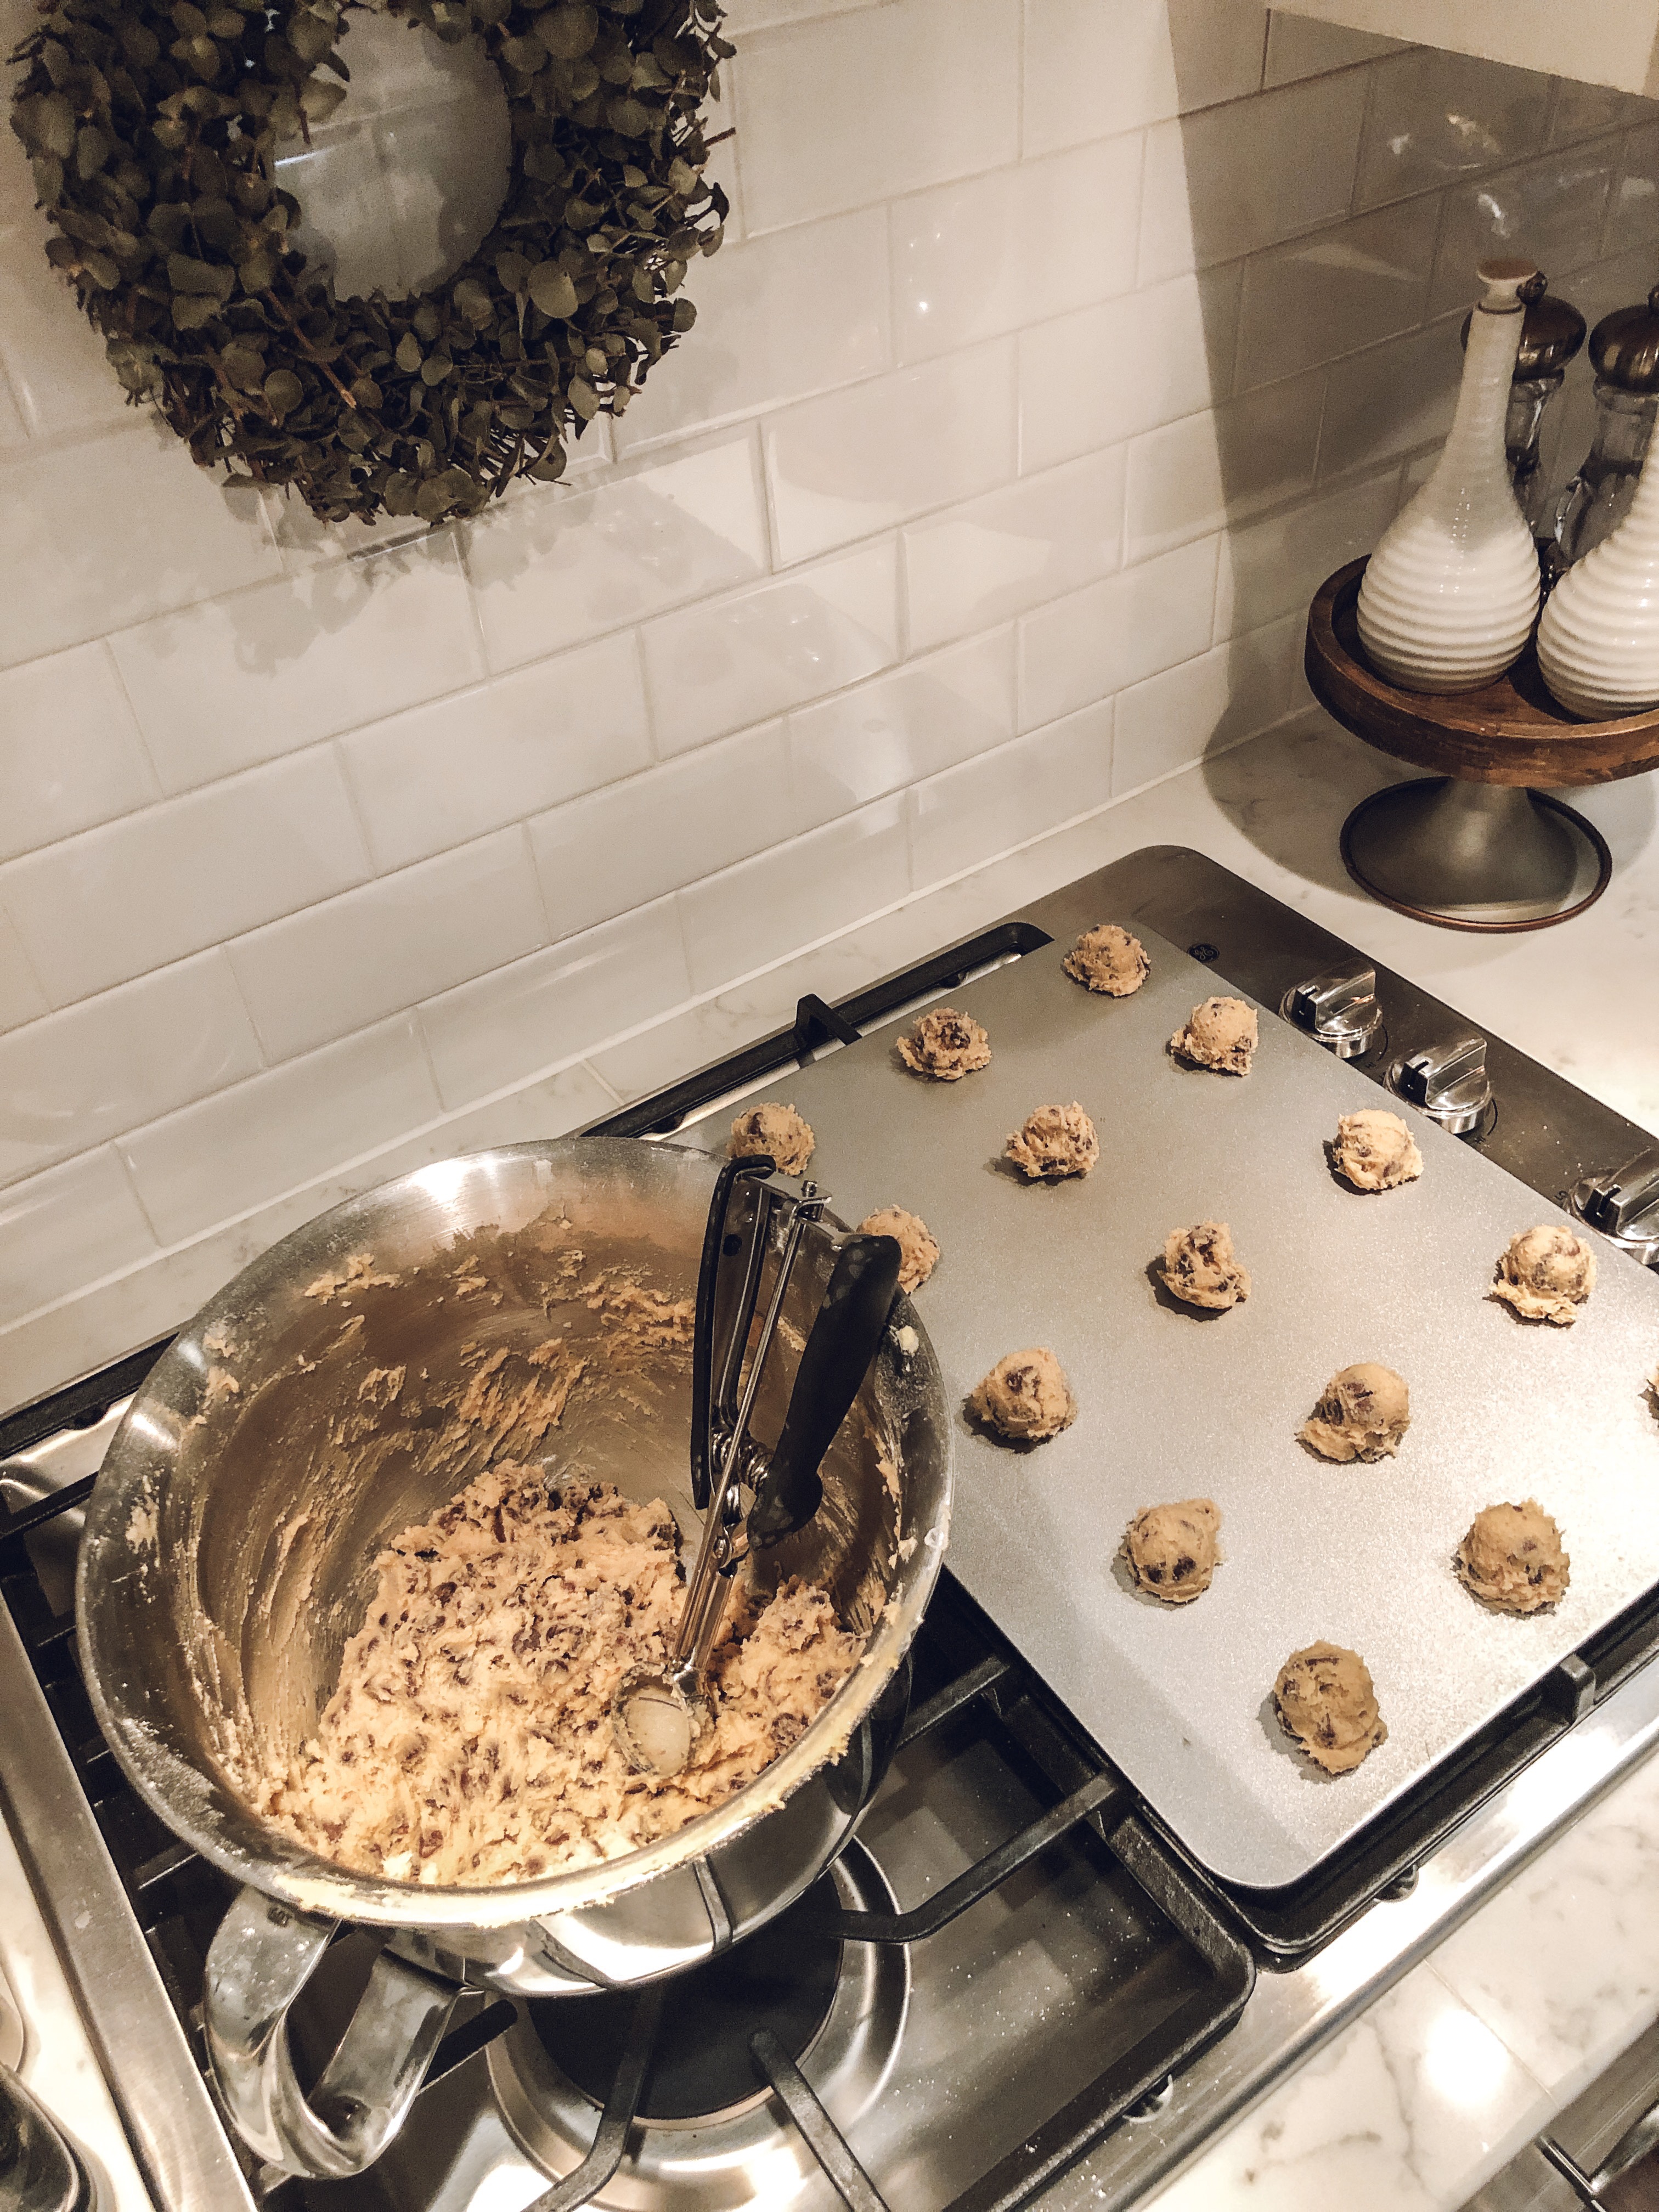 Cookie dough recipe